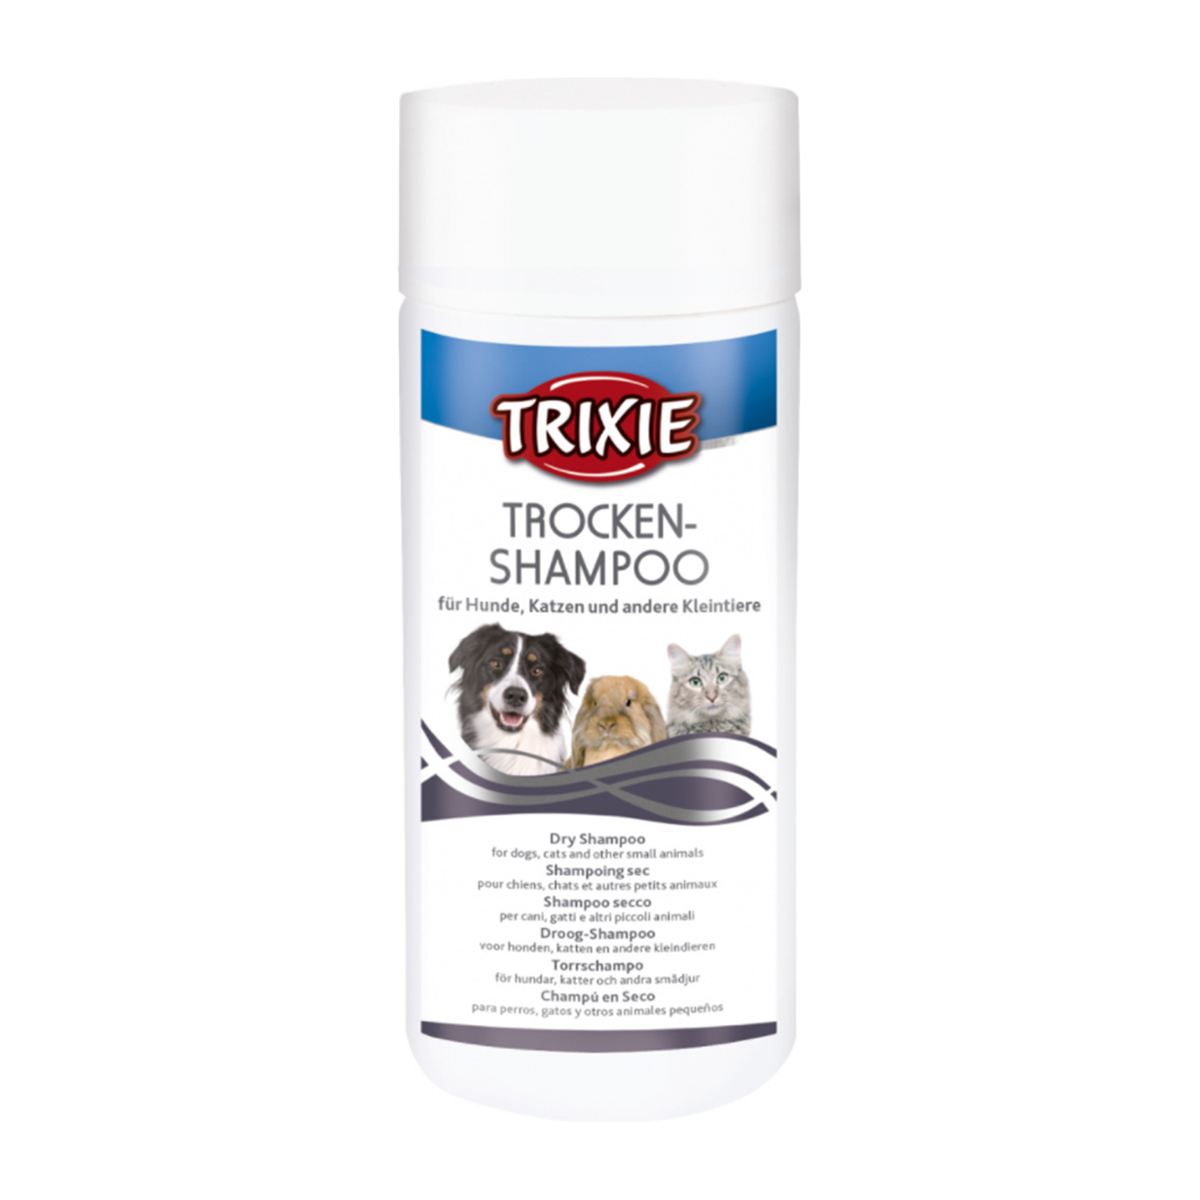 trixie trocken shampoo